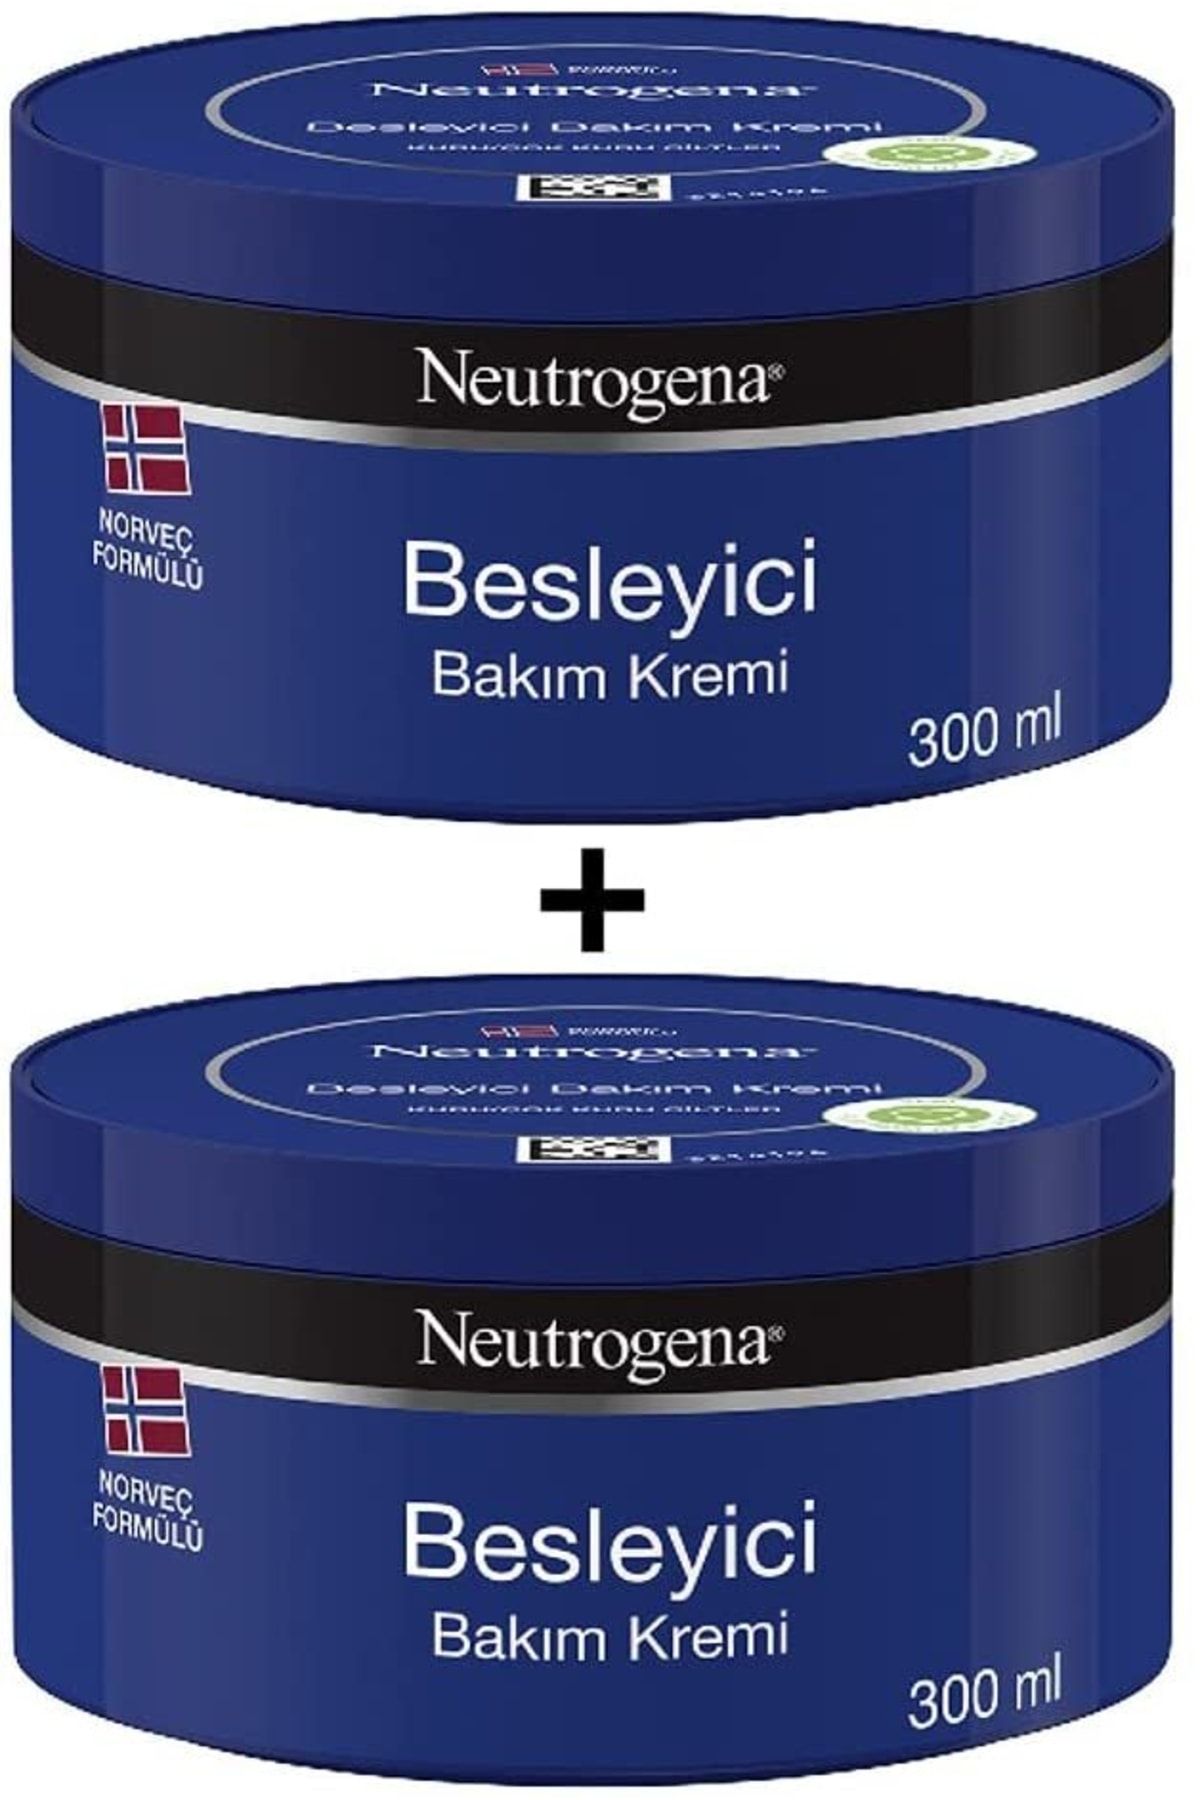 Neutrogena Besleyici Bakım Kremi 300 ml x2 1 Paket 1 X 300 ml